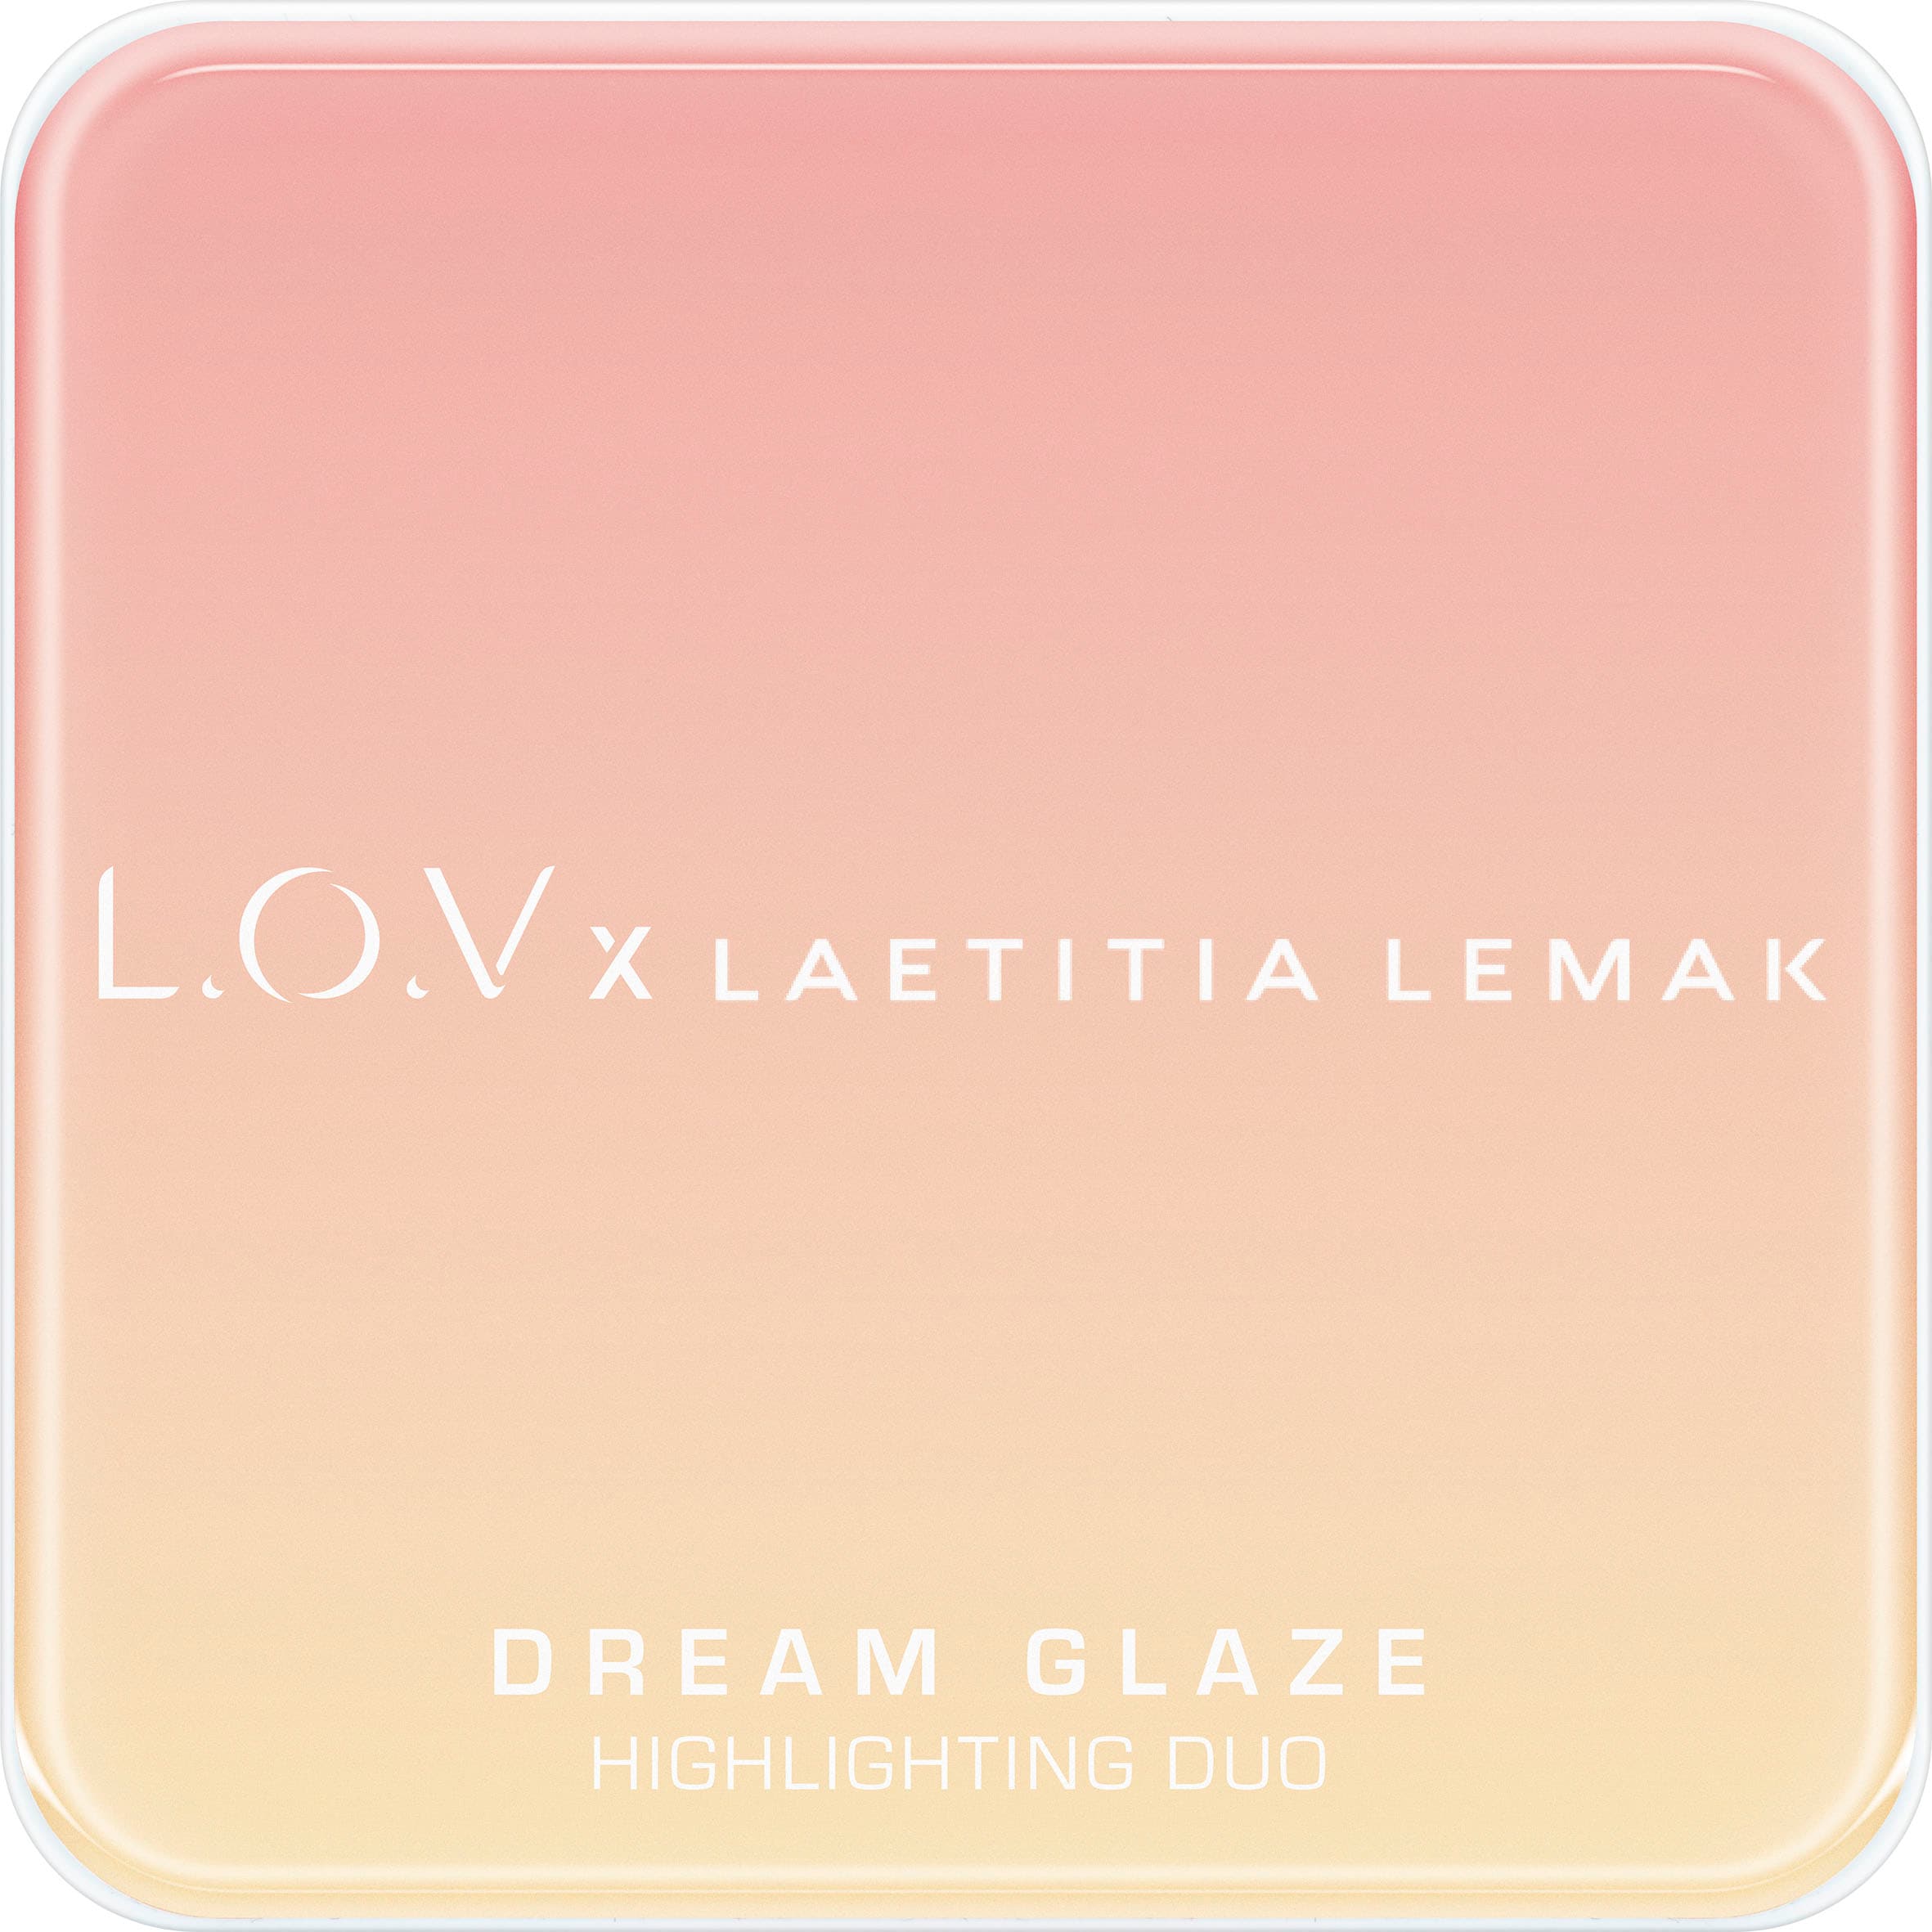 L.O.V Highlighter-Palette »L.O.V x LAETITIA online GLAZE Duo« kaufen LEMAK Highlighting DREAM